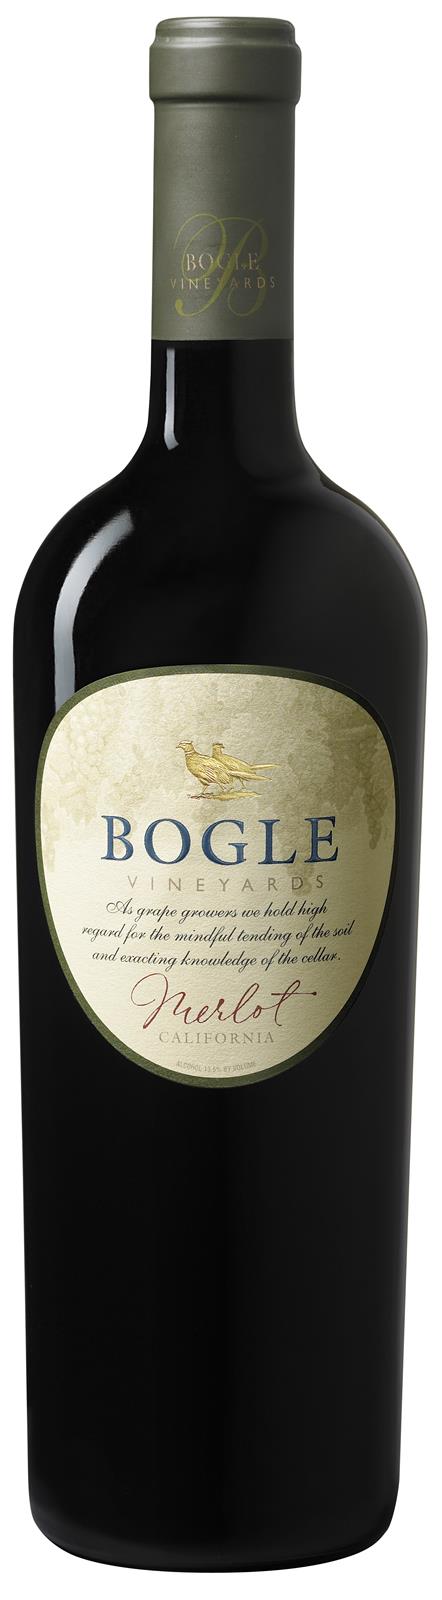 Bogle Vineyards Merlot 2018 (California)